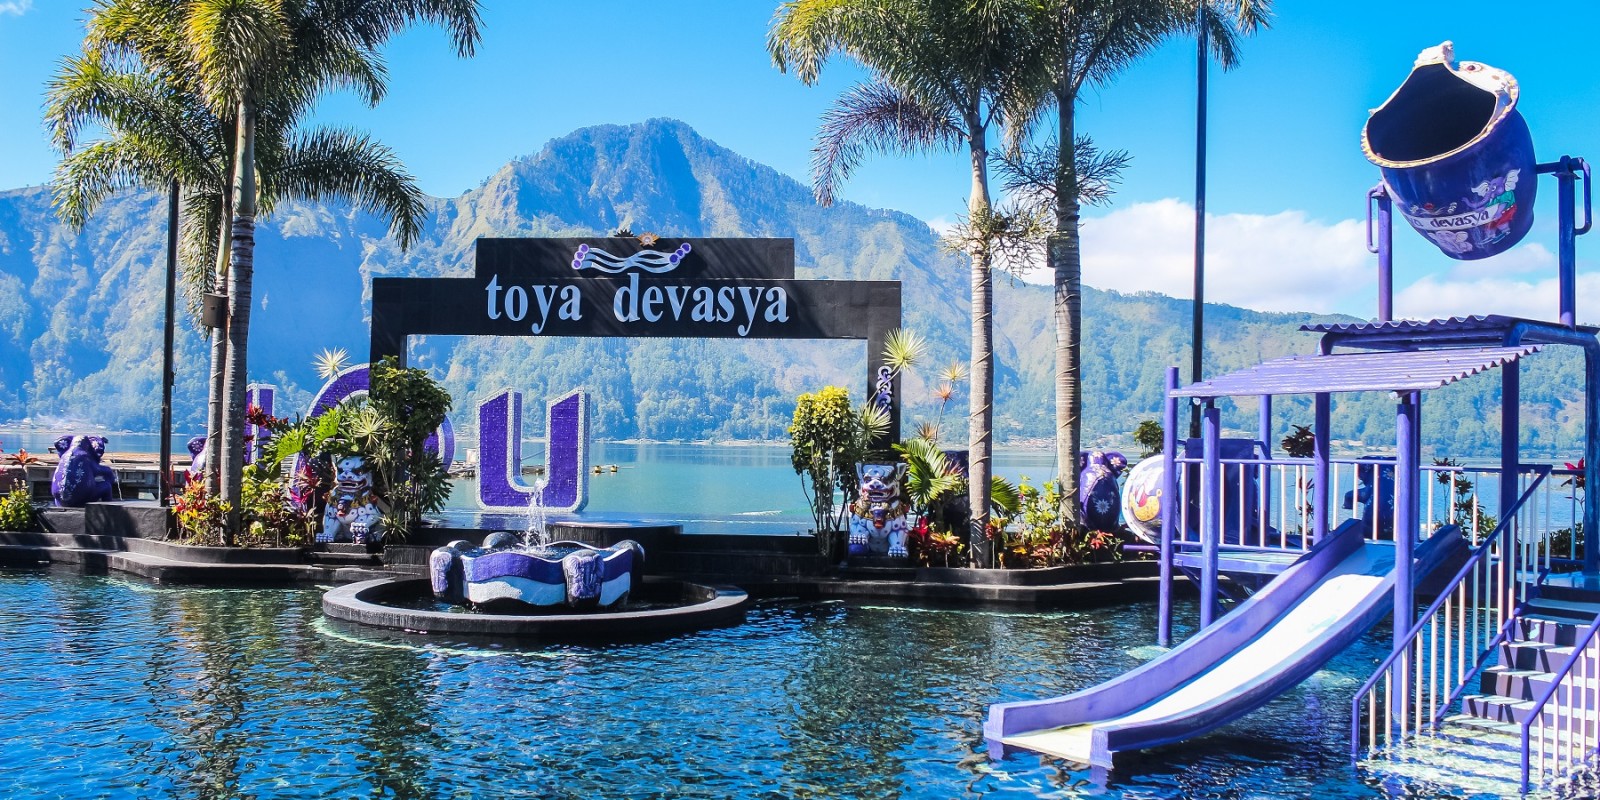 Destinasi Wisata Bali - Toya Devasya (toyadevasya)